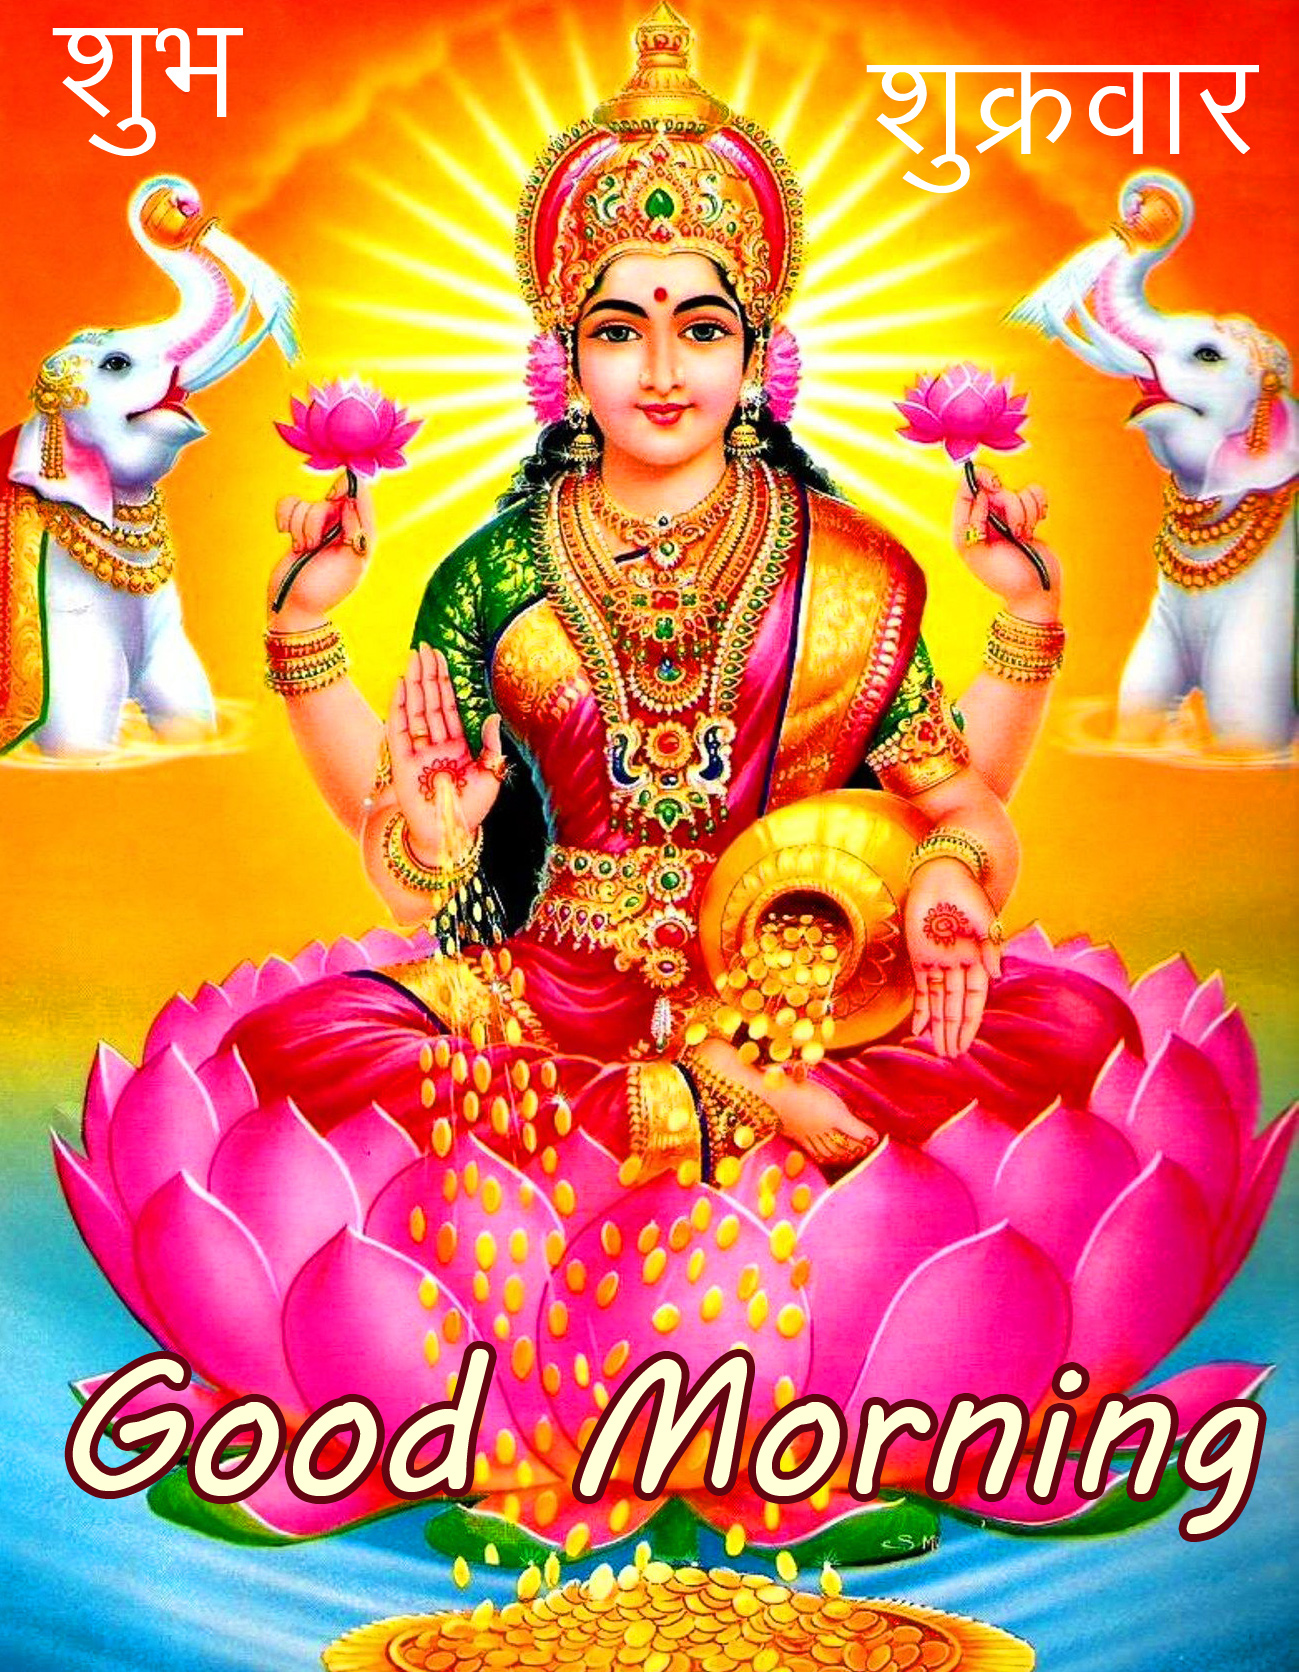 Beautiful Laxmi Maa Subh Sukrawar Good Morning Wallpaper and Pic